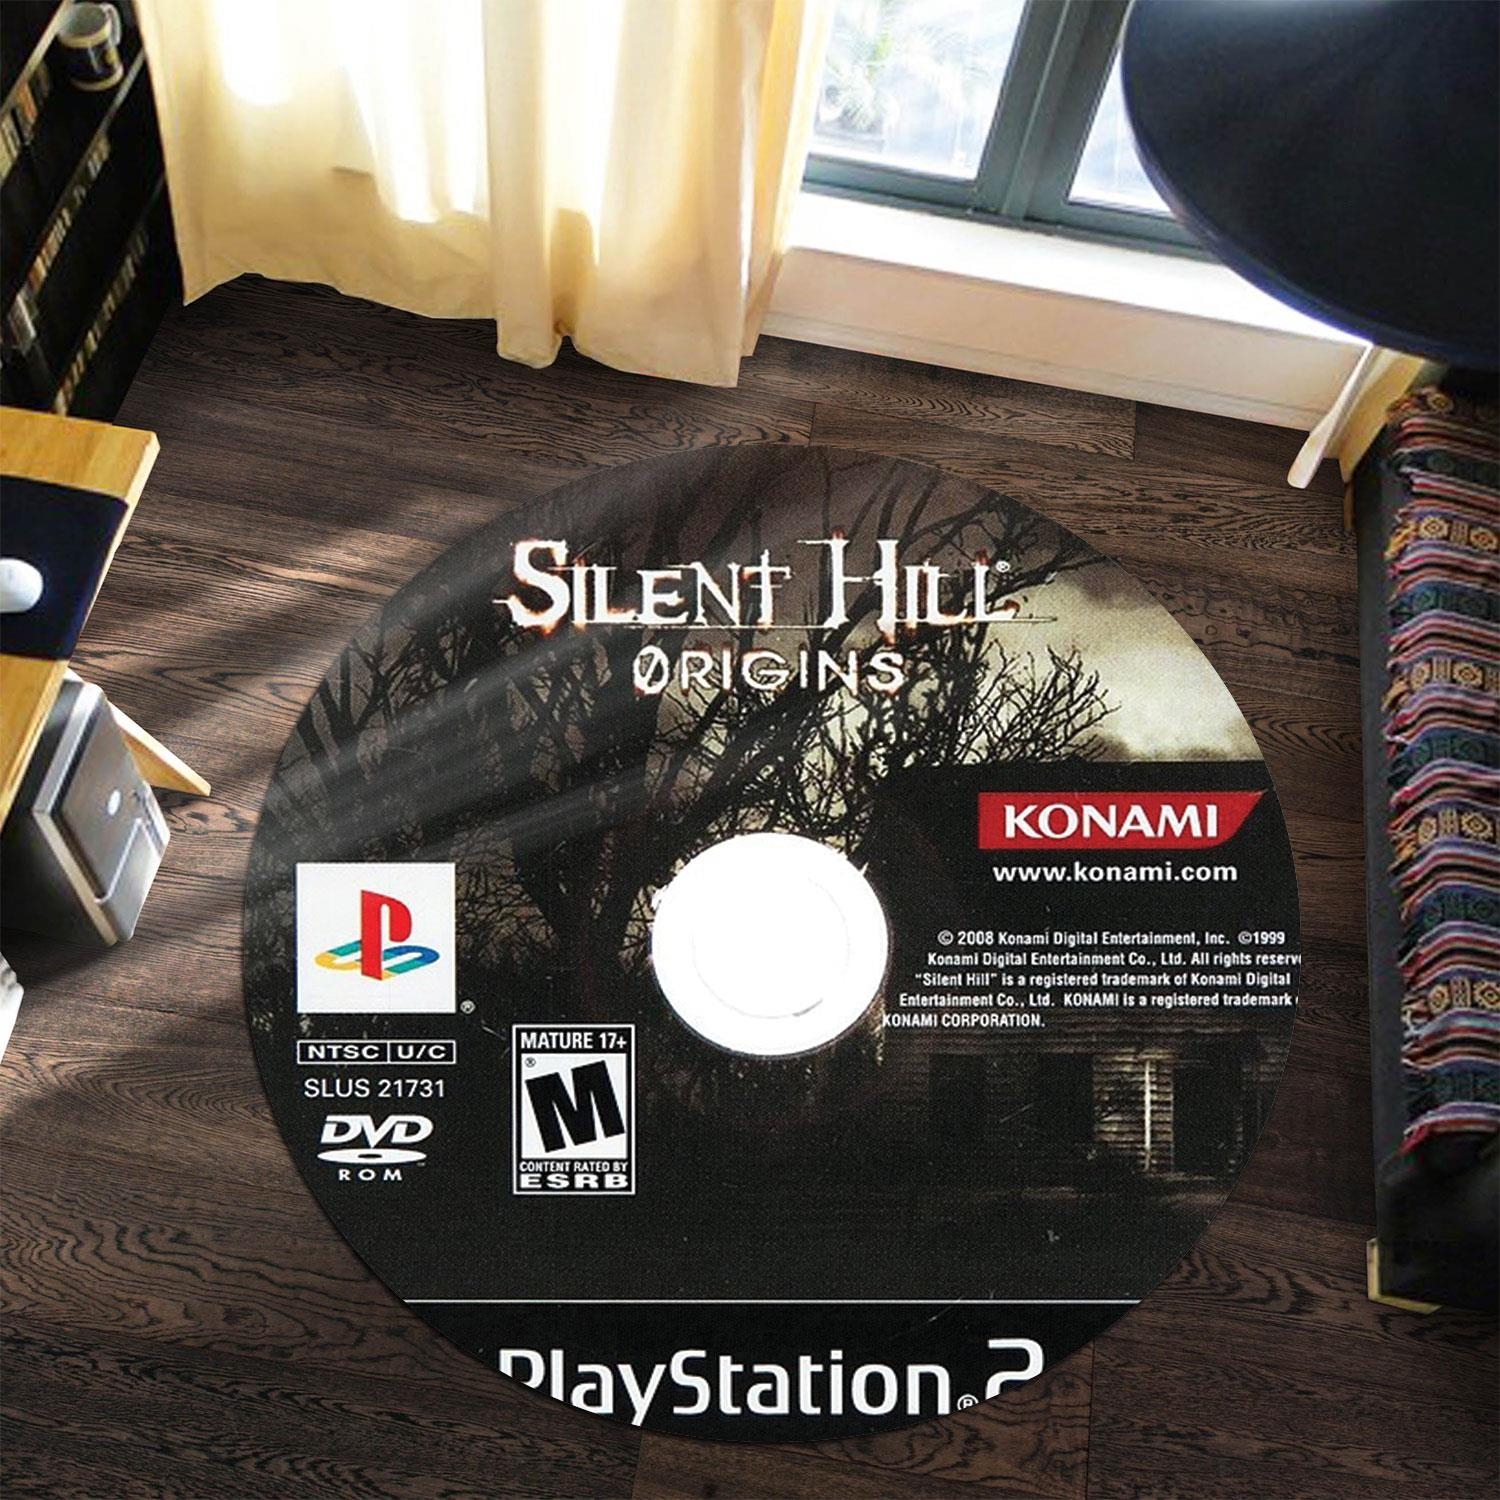 Silent Hill 3 Version Disc Round Rug Carpet